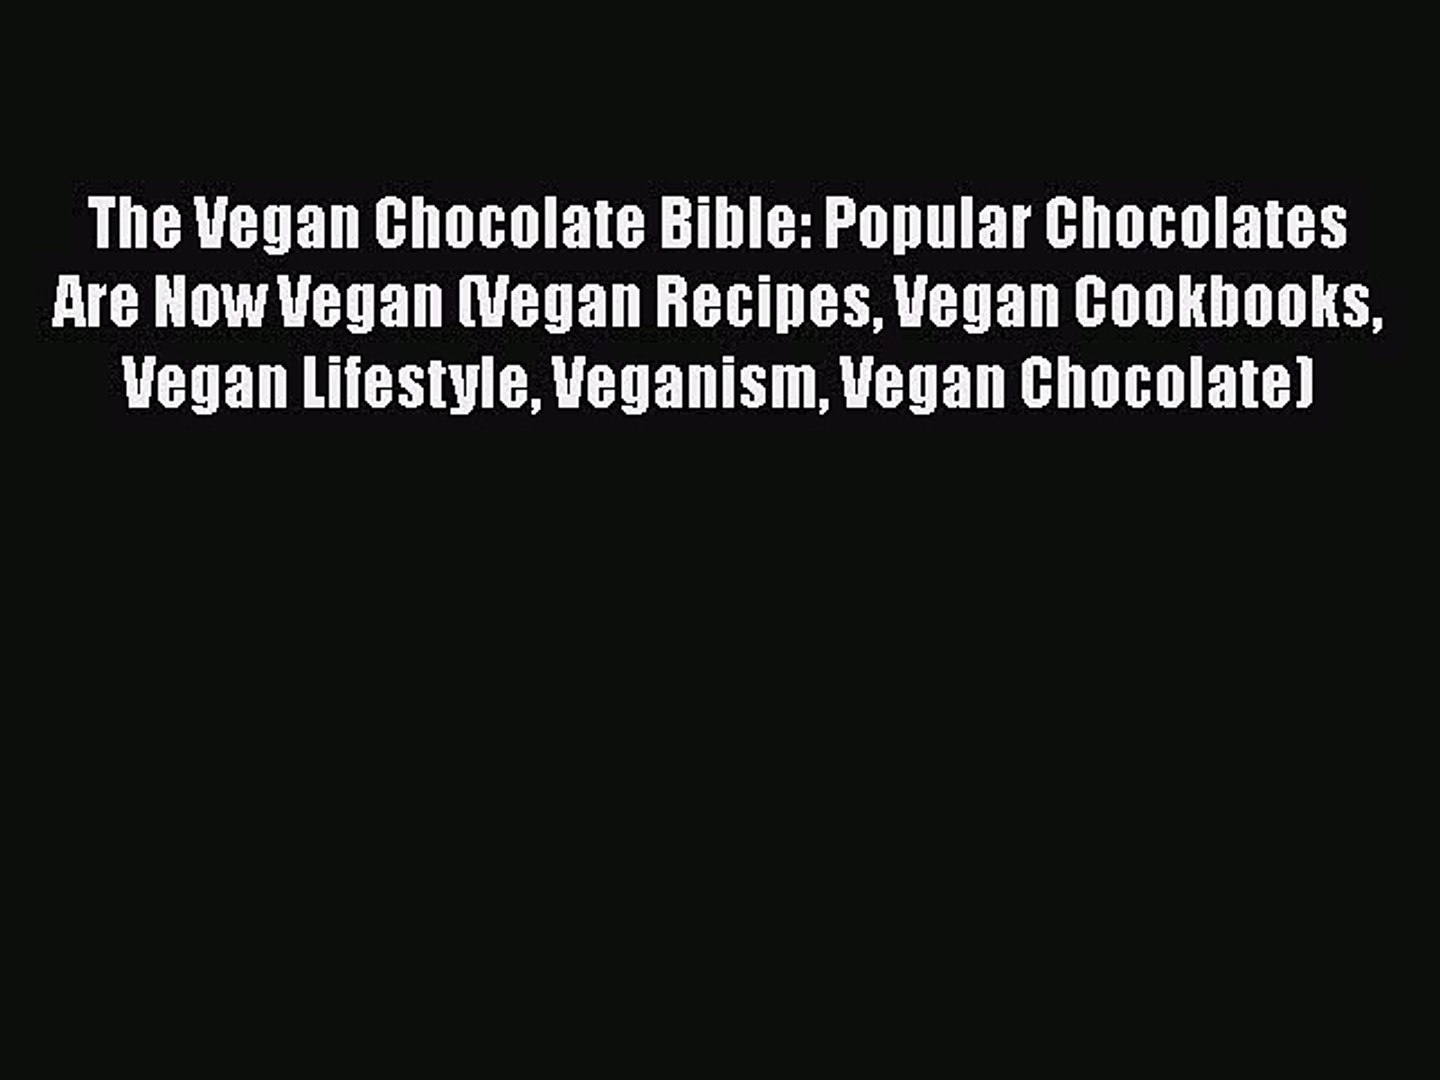 Download The Vegan Chocolate Bible: Popular Chocolates Are Now Vegan (Vegan Recipes Vegan Cookbooks